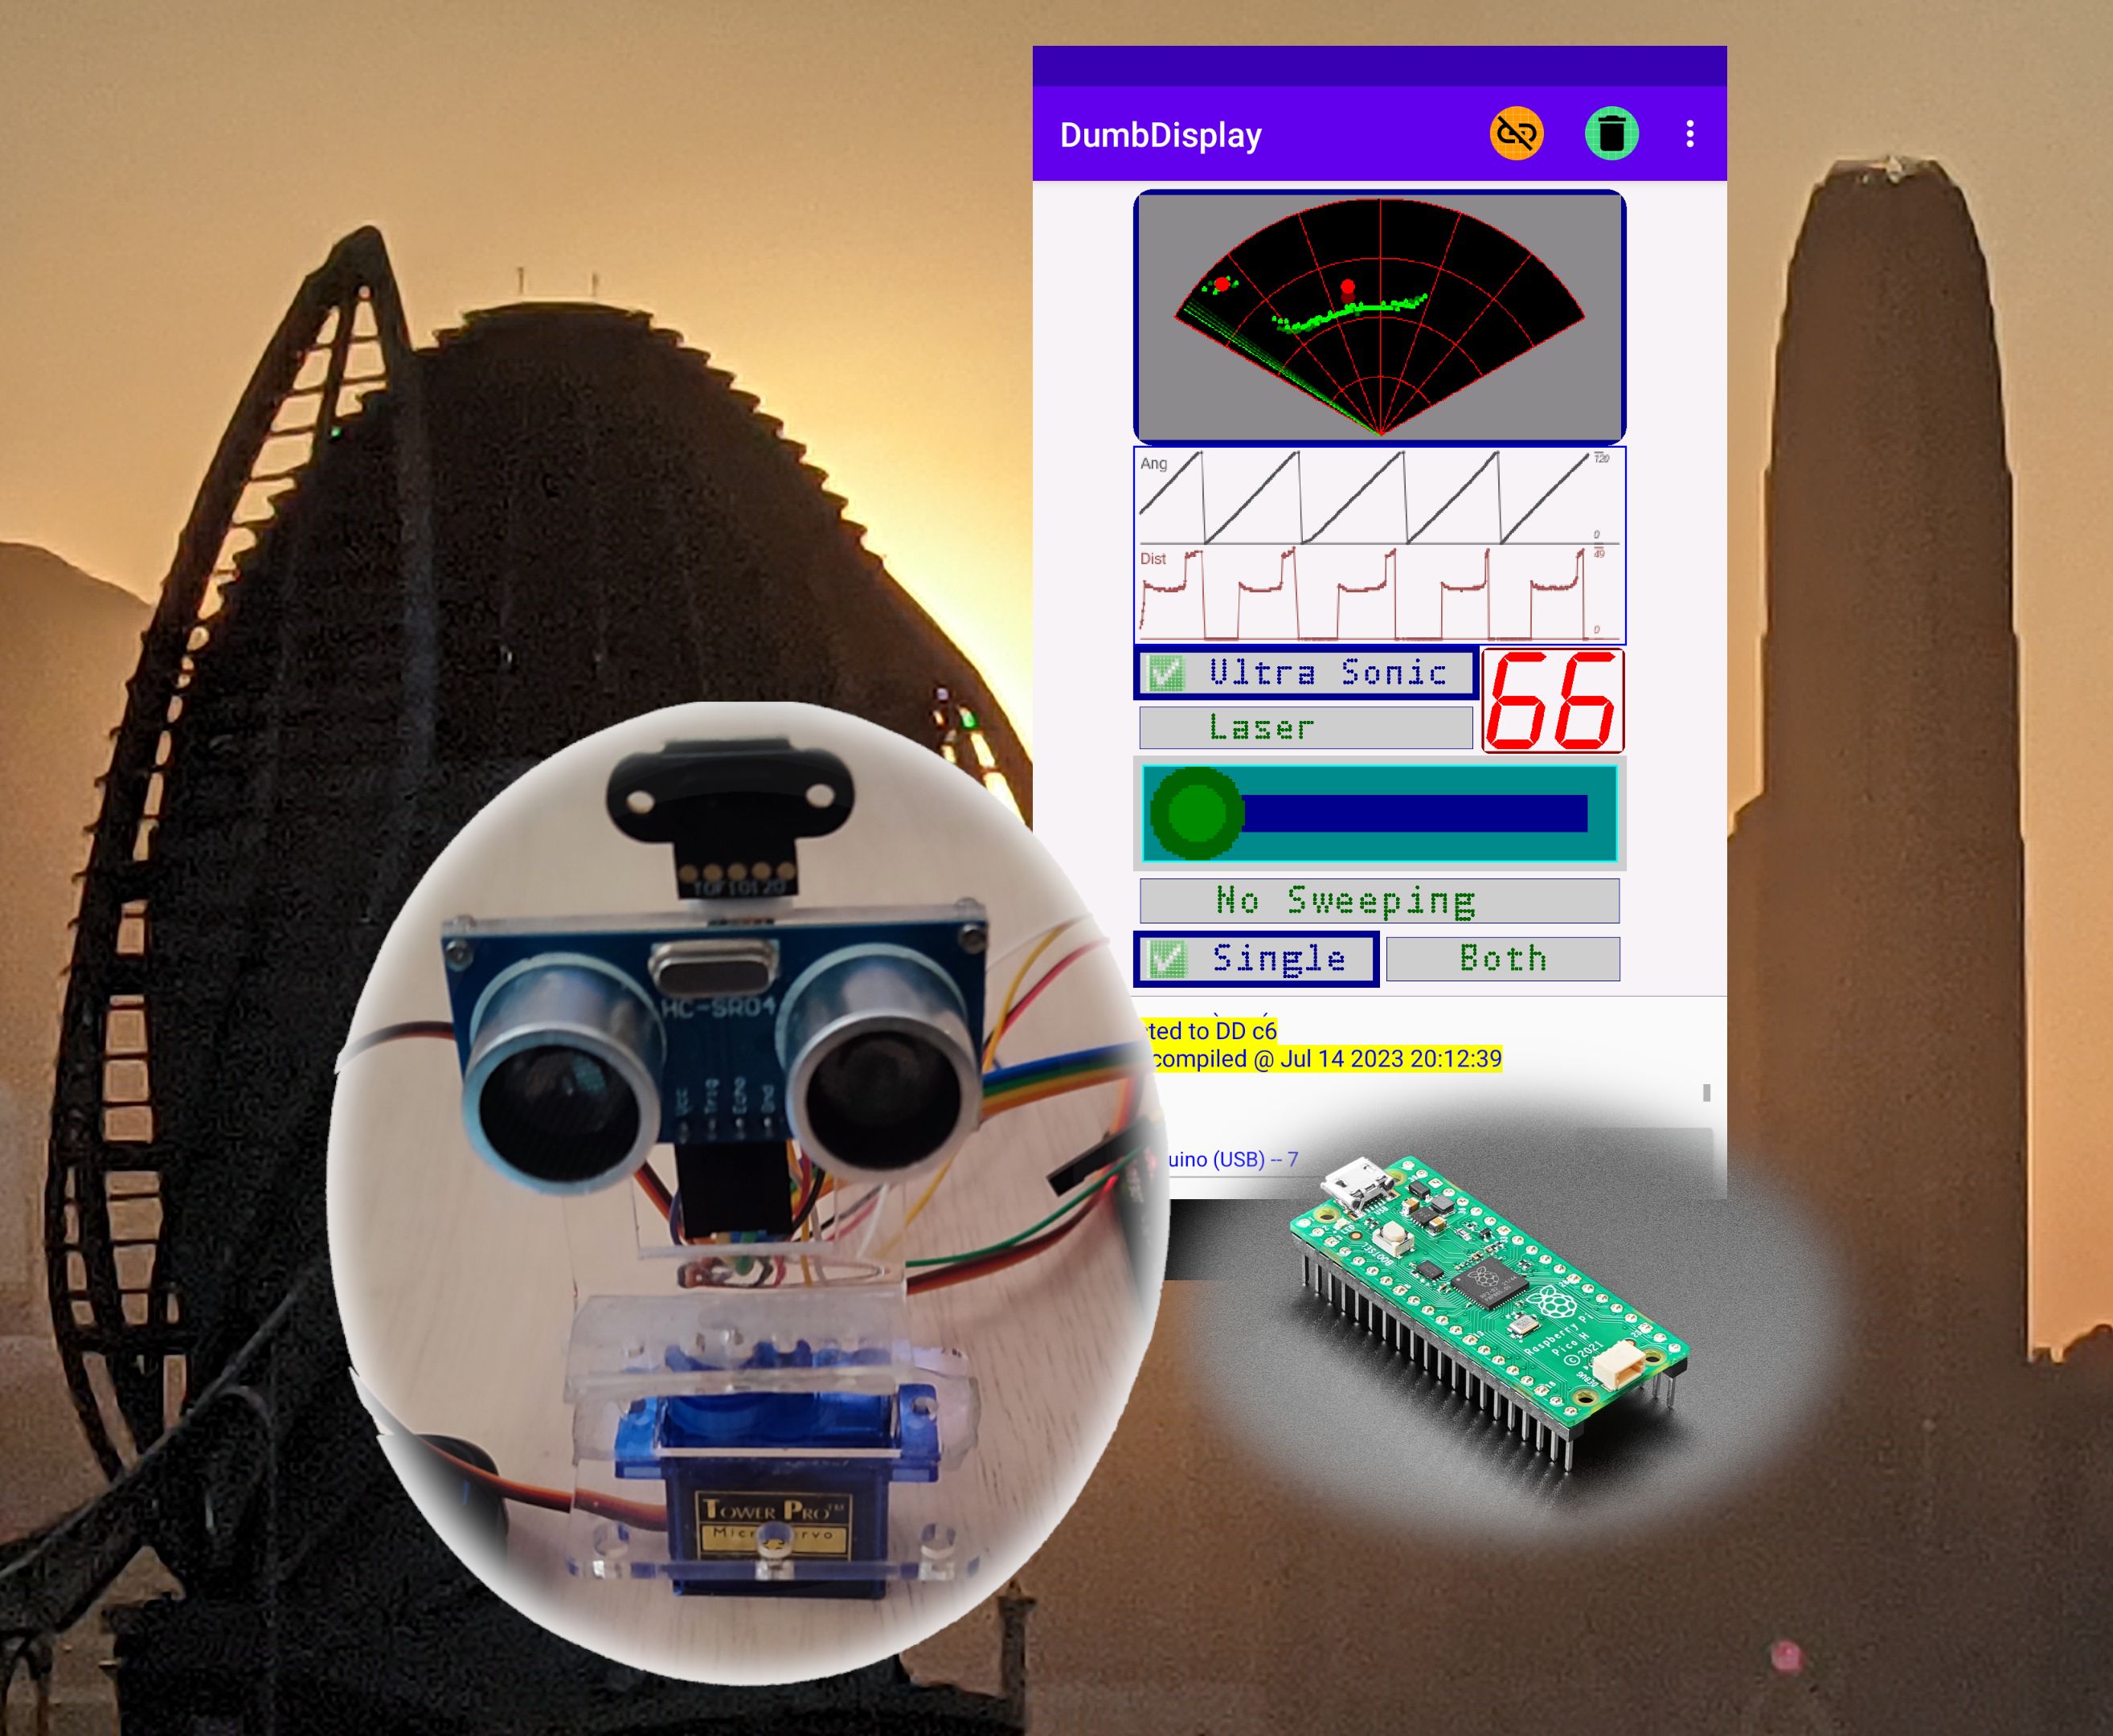 Arduino Experiment of Ultrasonic Sensor, ToF Laser Range Sensor and Servo Motor, With Raspberry Pi Pico and DumbDisplay